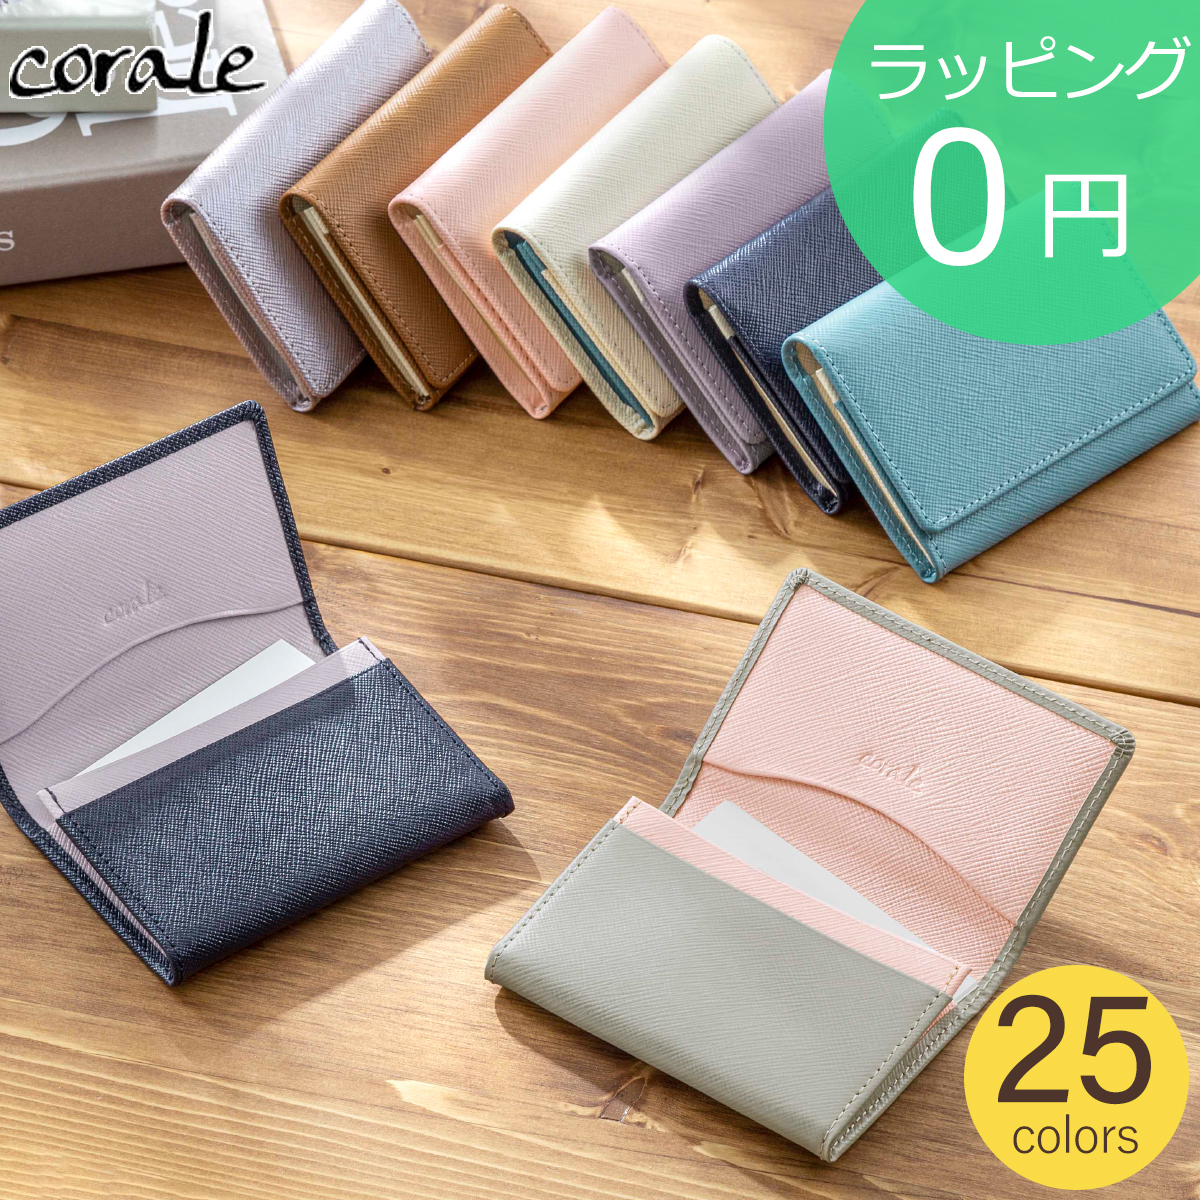 coralekola-re card-case lady's leather original leather bai color p rhythm leather card-case business card case simple stylish for women 